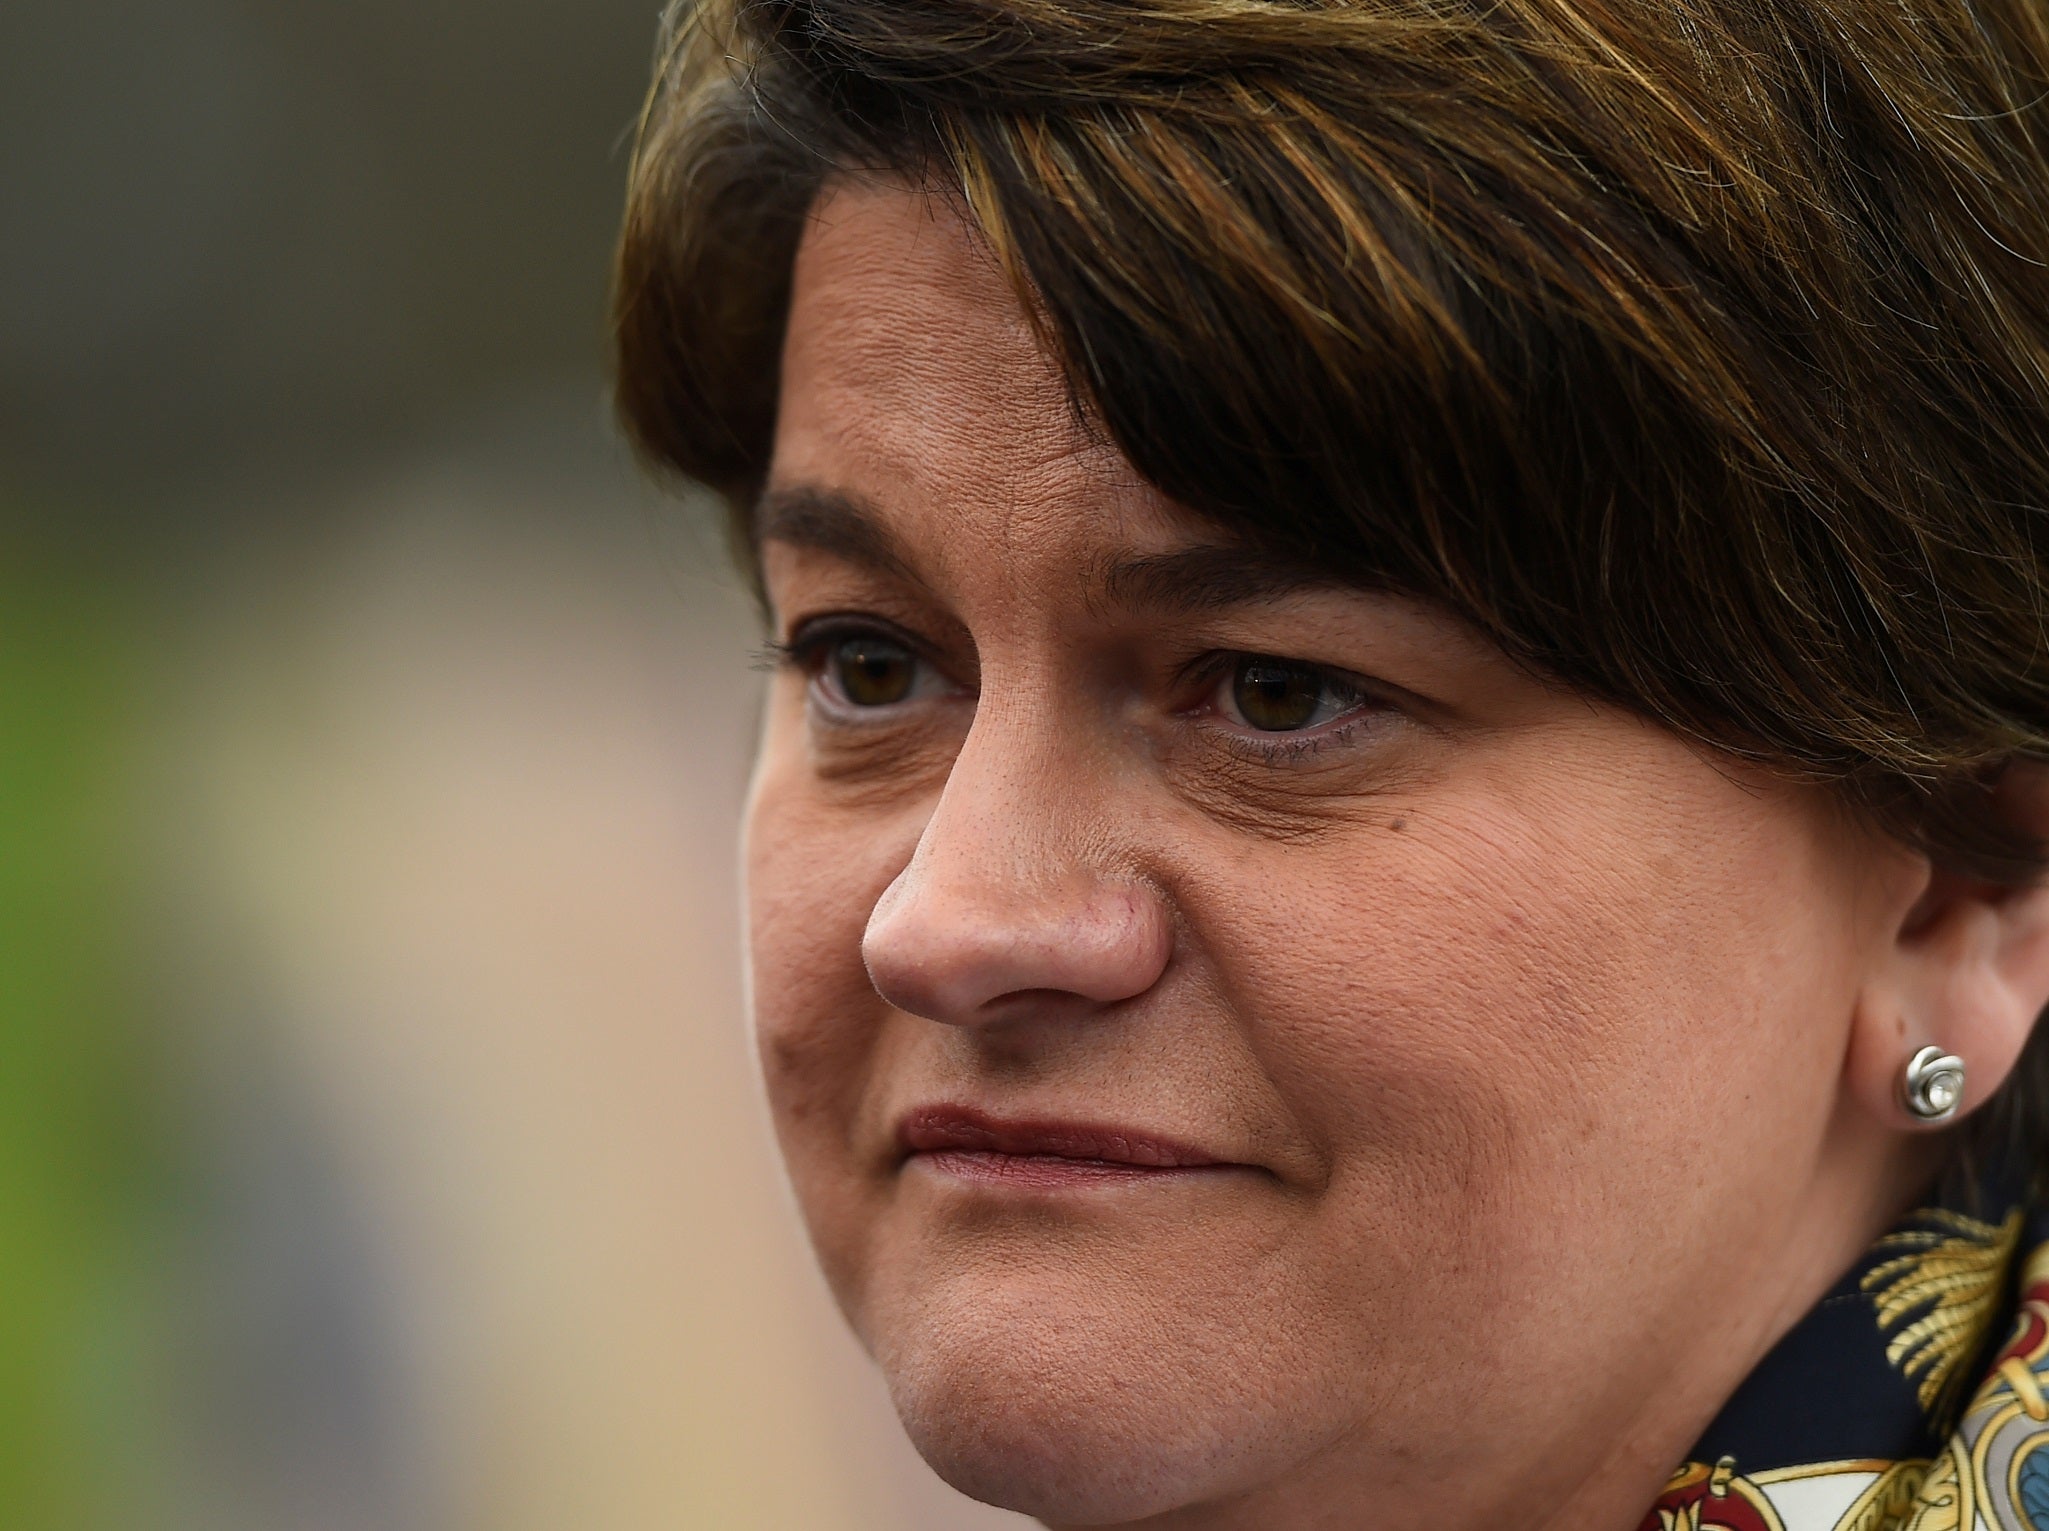 DUP leader Arlene Foster has denied her party is homophobic